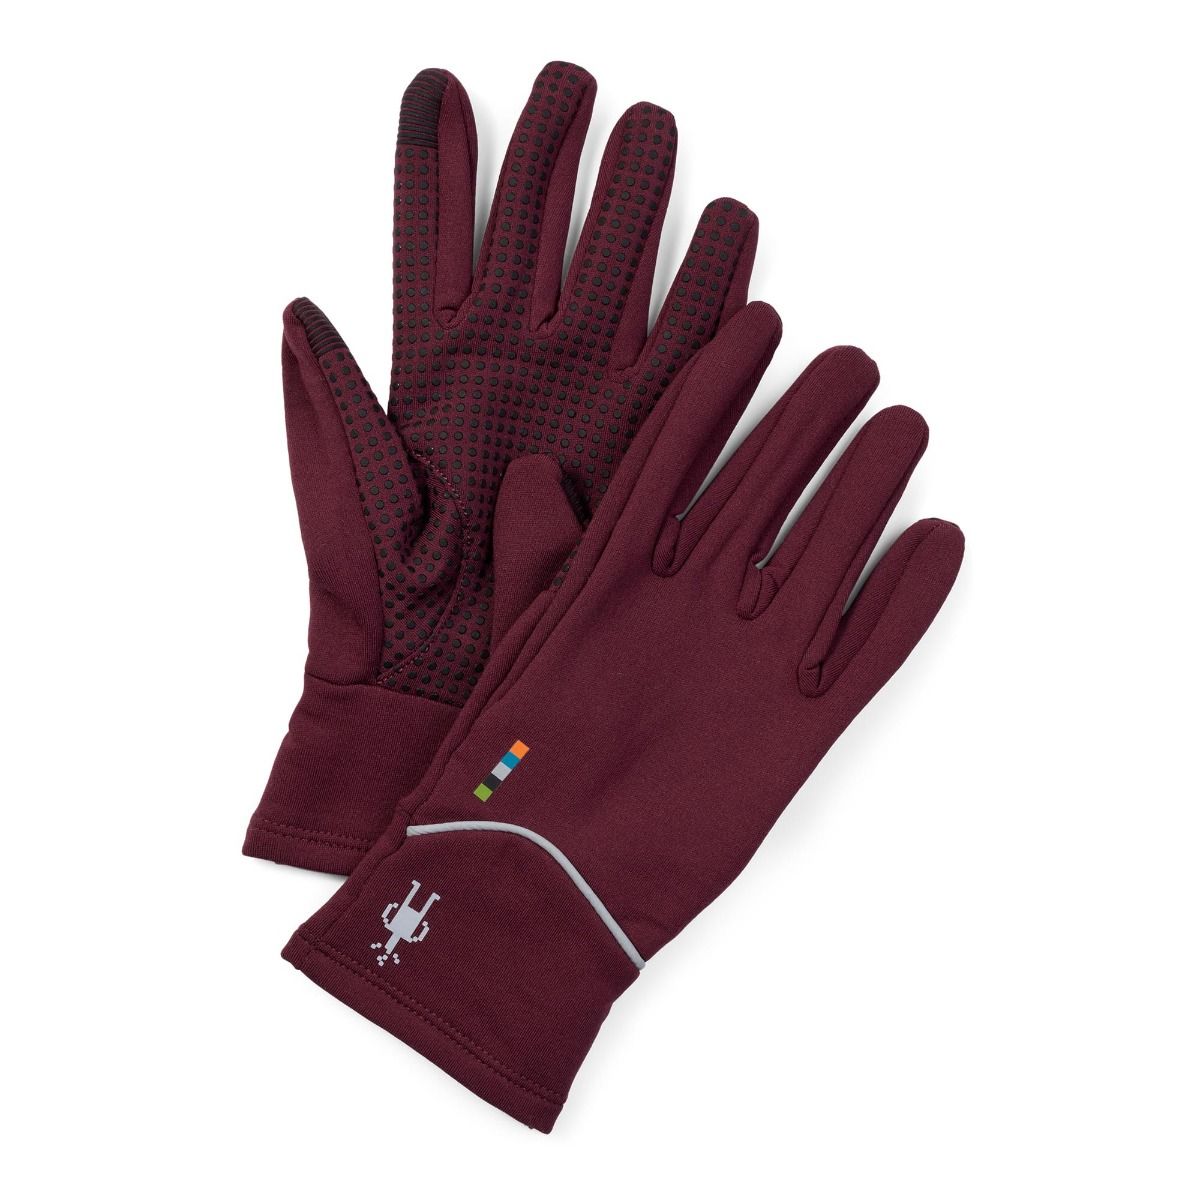 SMARTWOOL Merino Sport Men's Wool Gloves